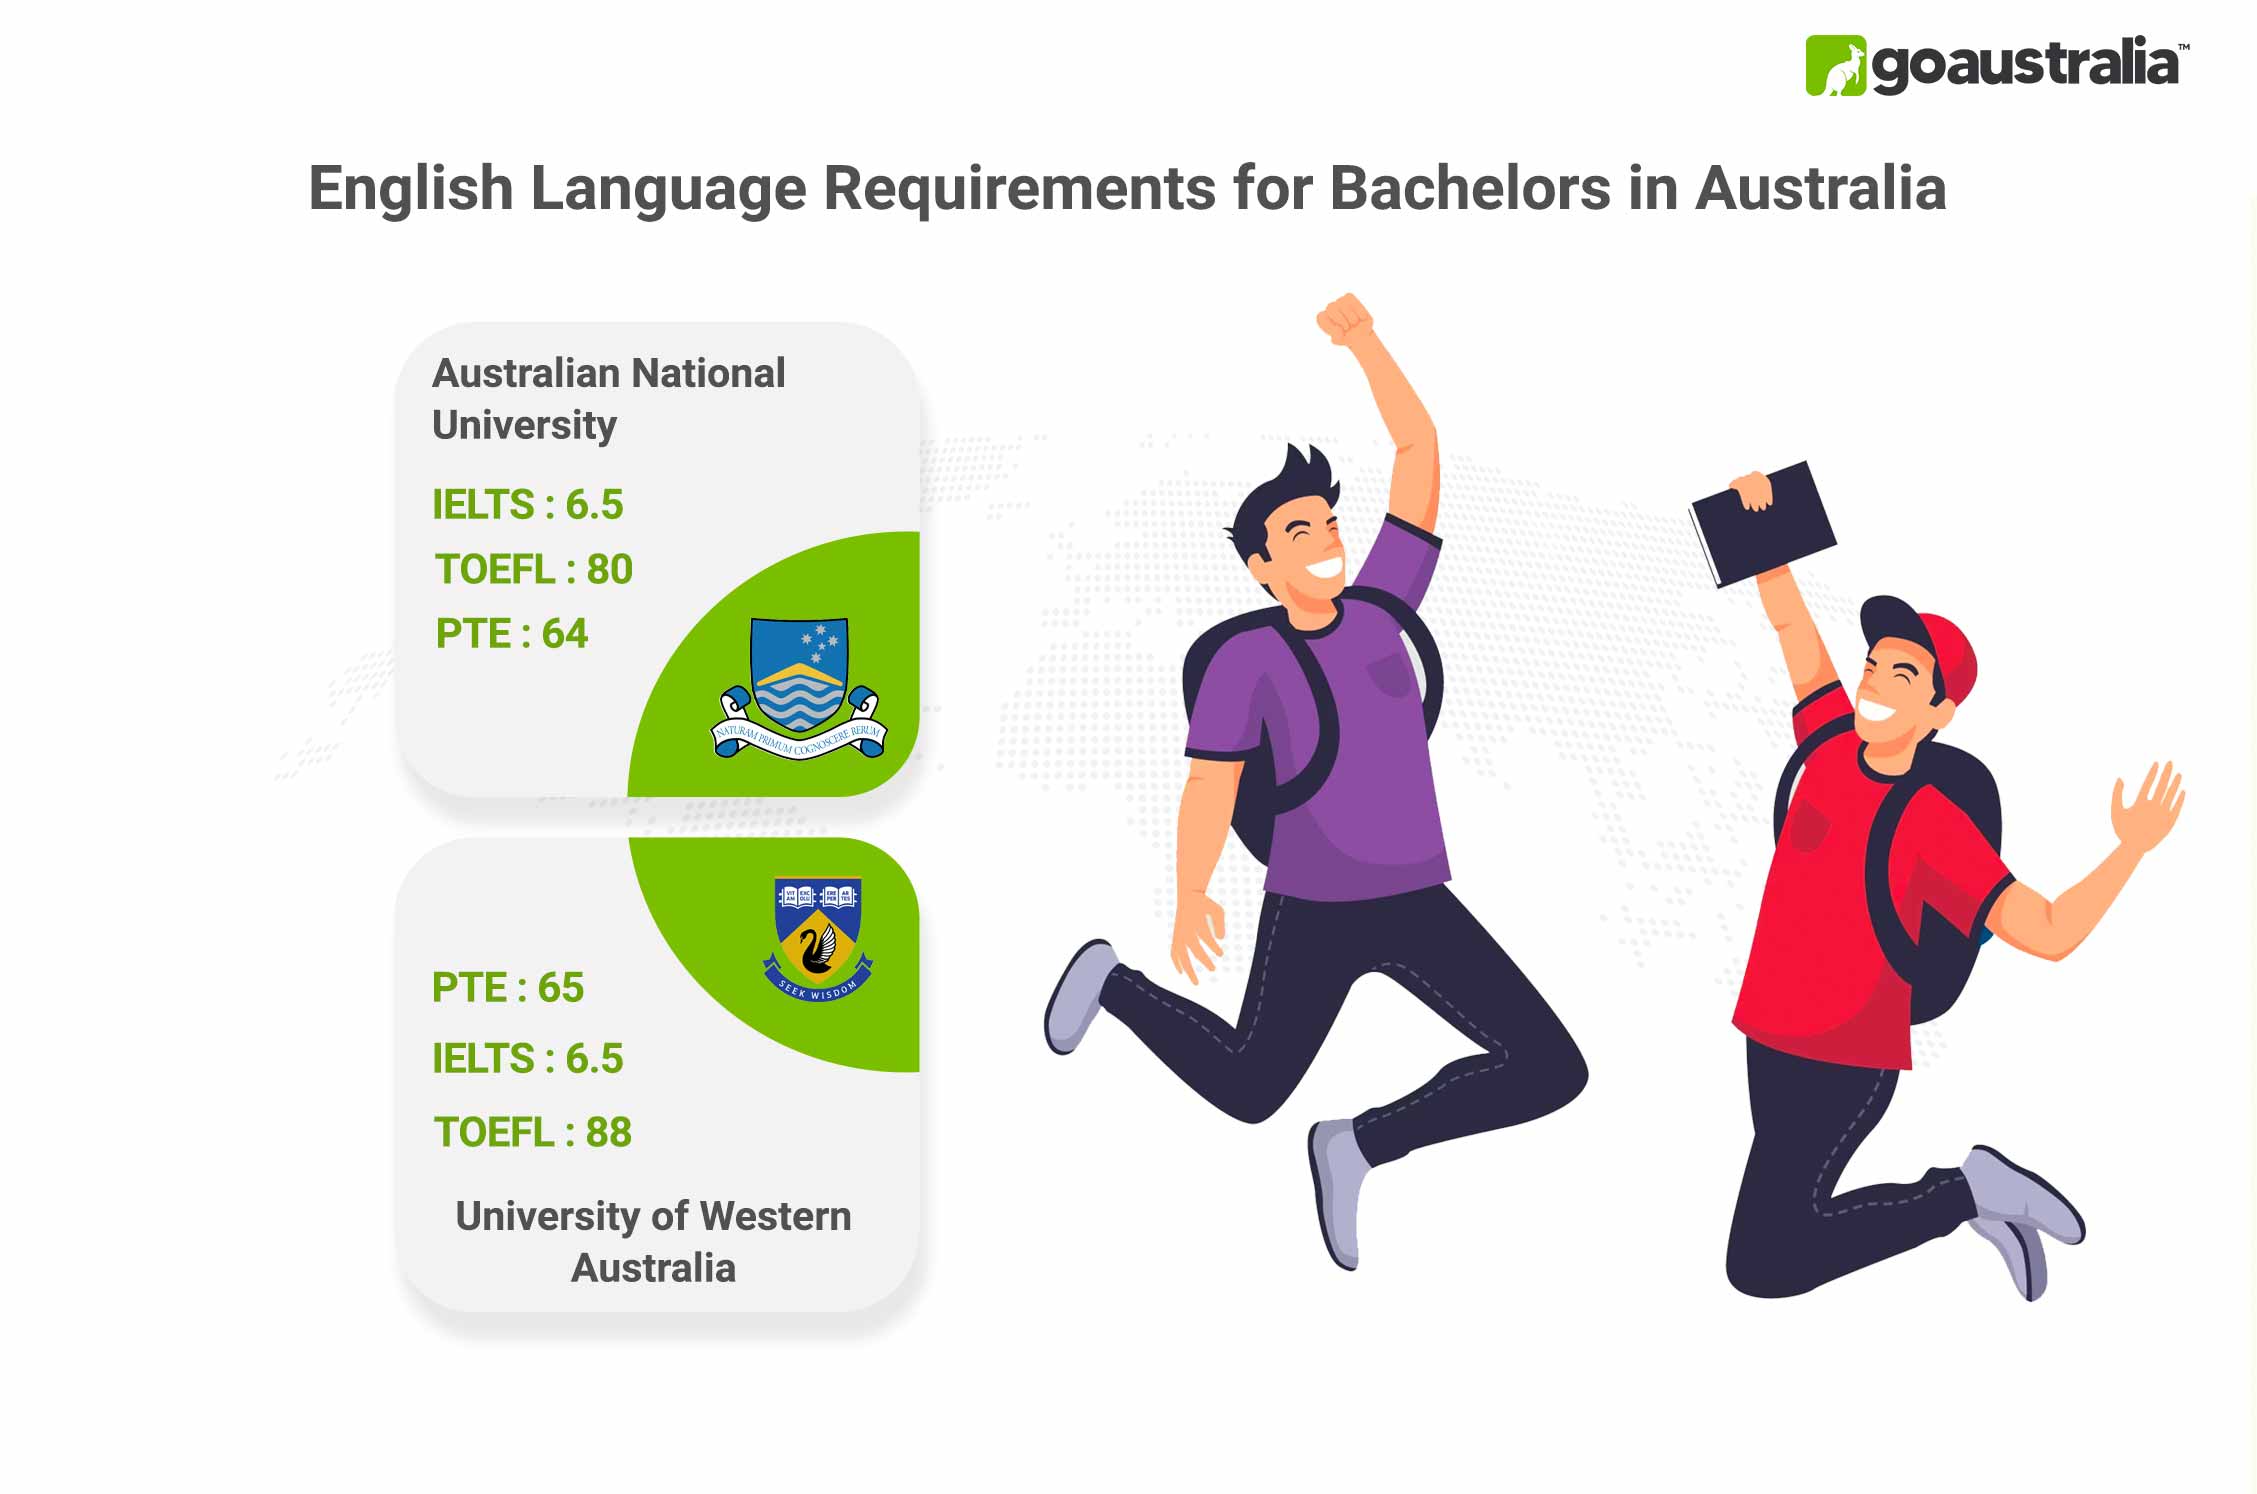 Bachelors in Australia